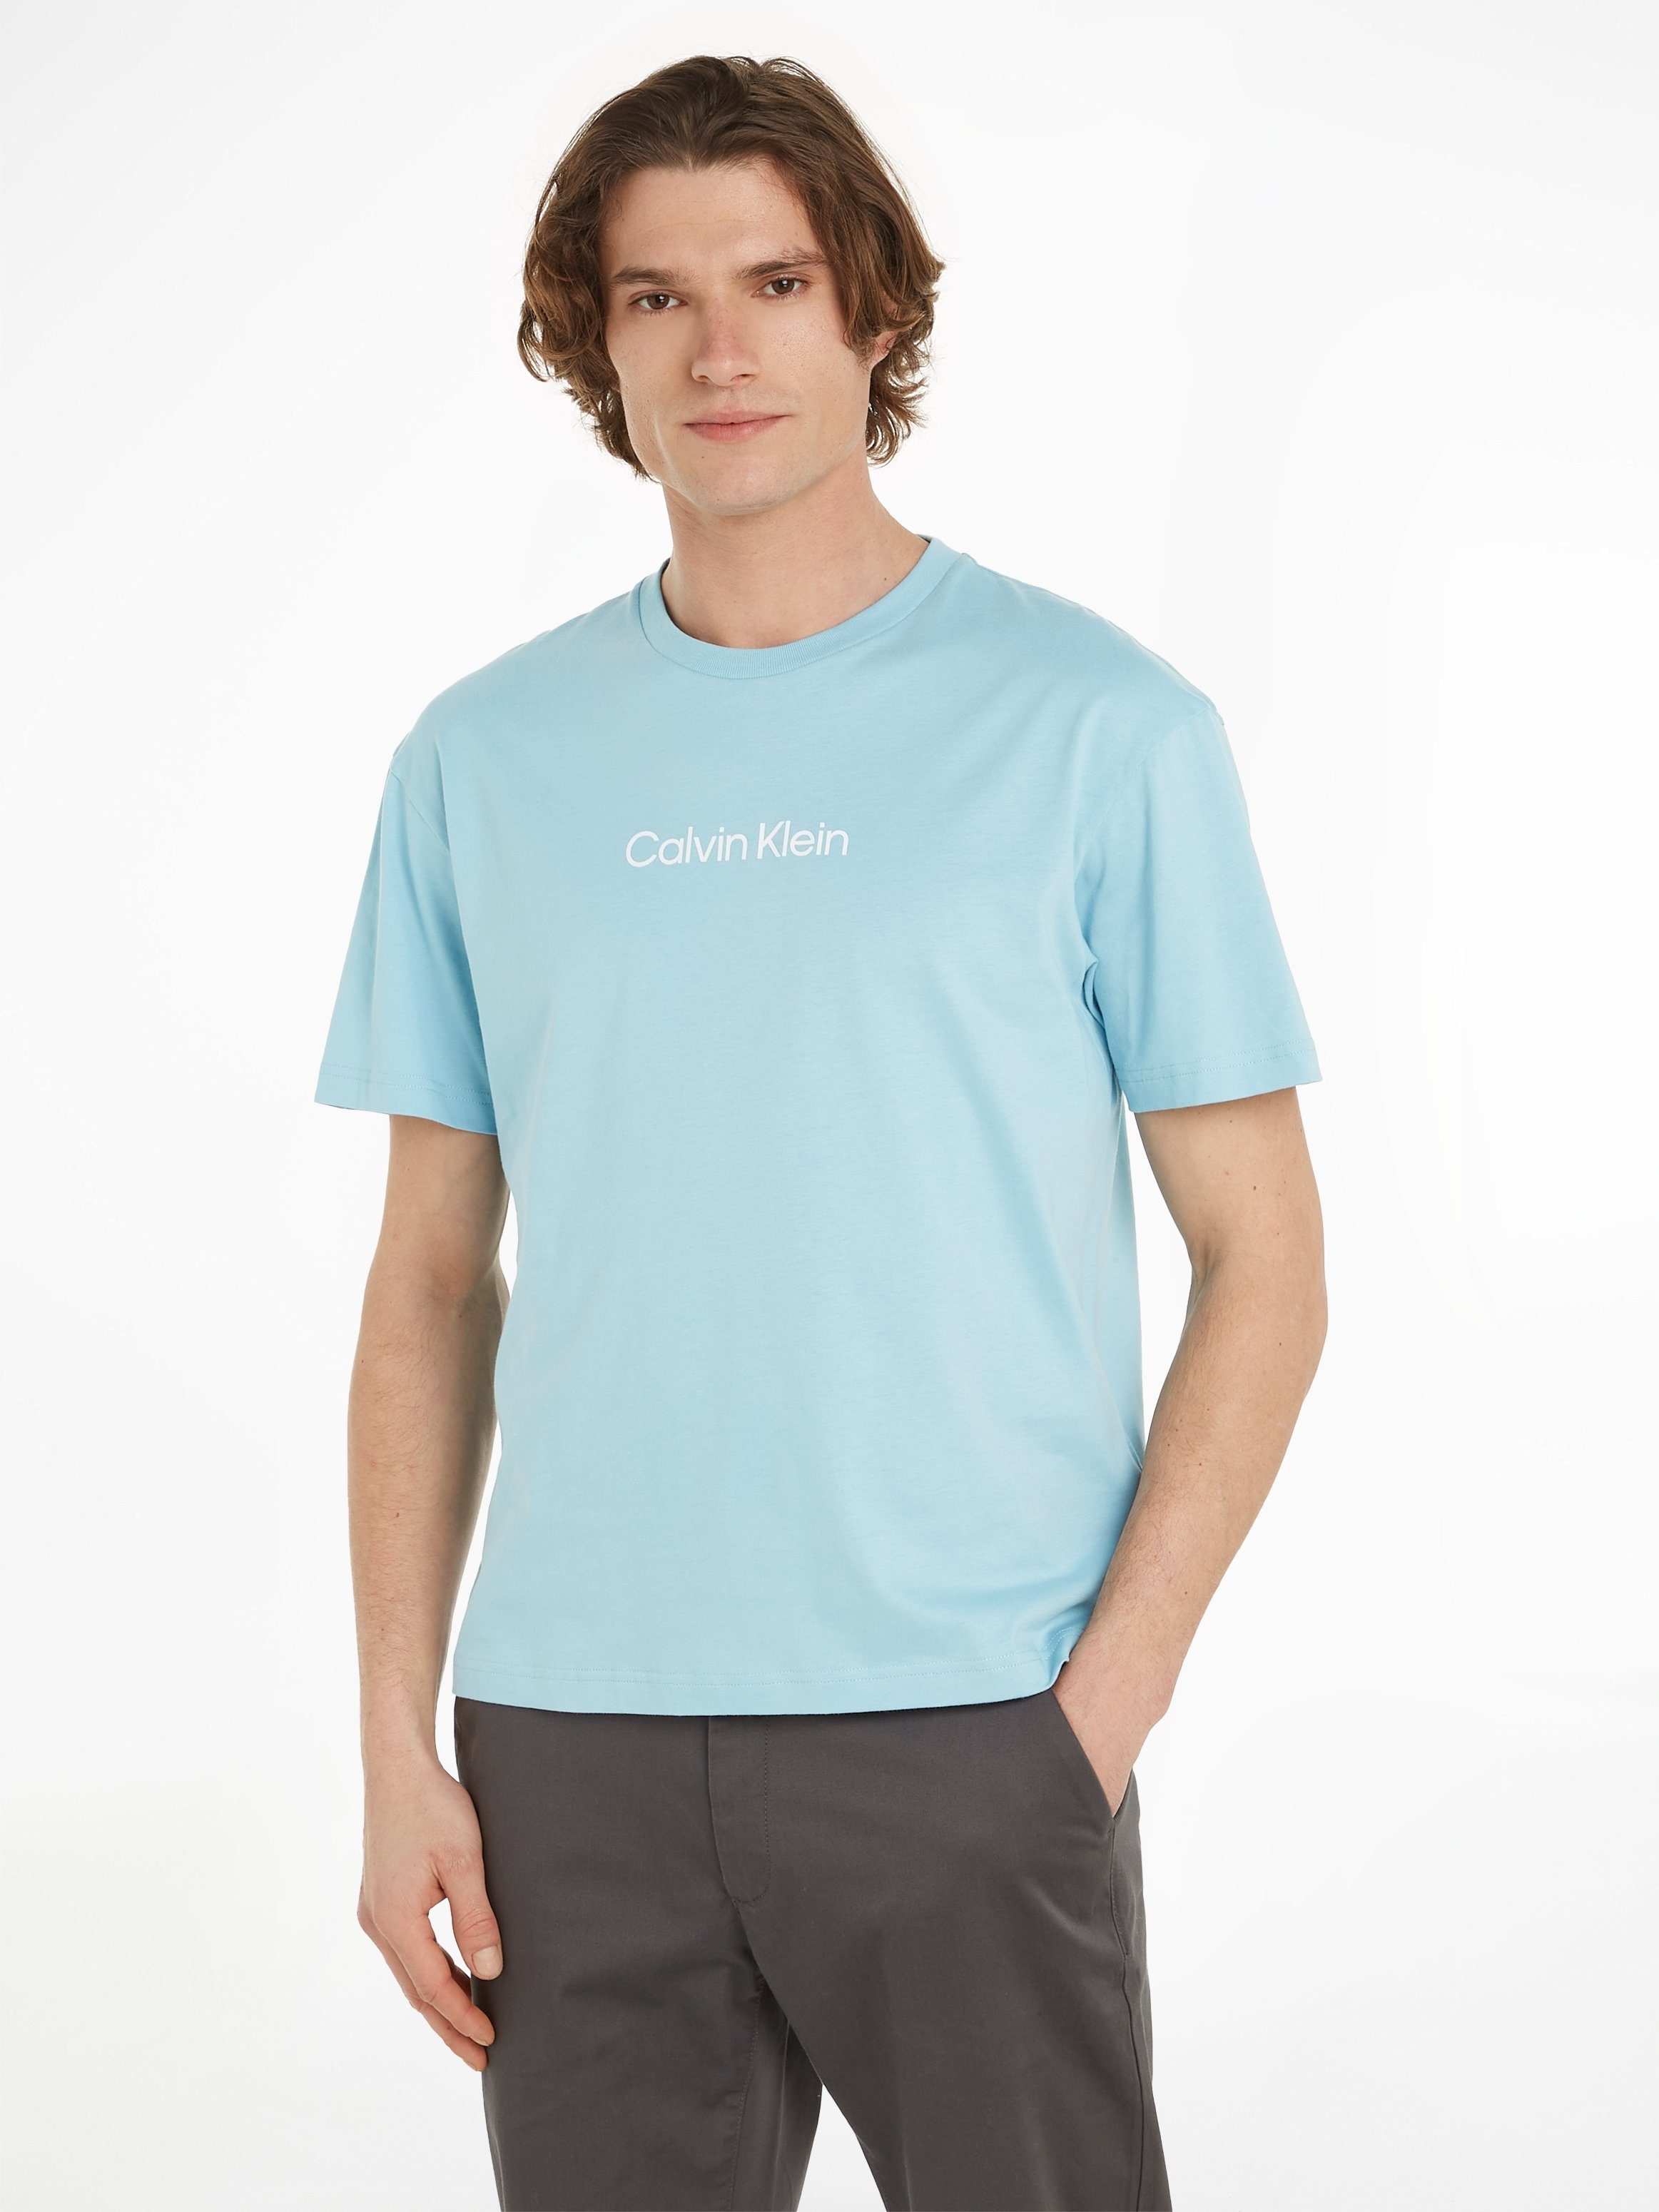 Calvin Klein T-Shirt HERO LOGO COMFORT T-SHIRT mit aufgedrucktem Markenlabel Tropic Blue